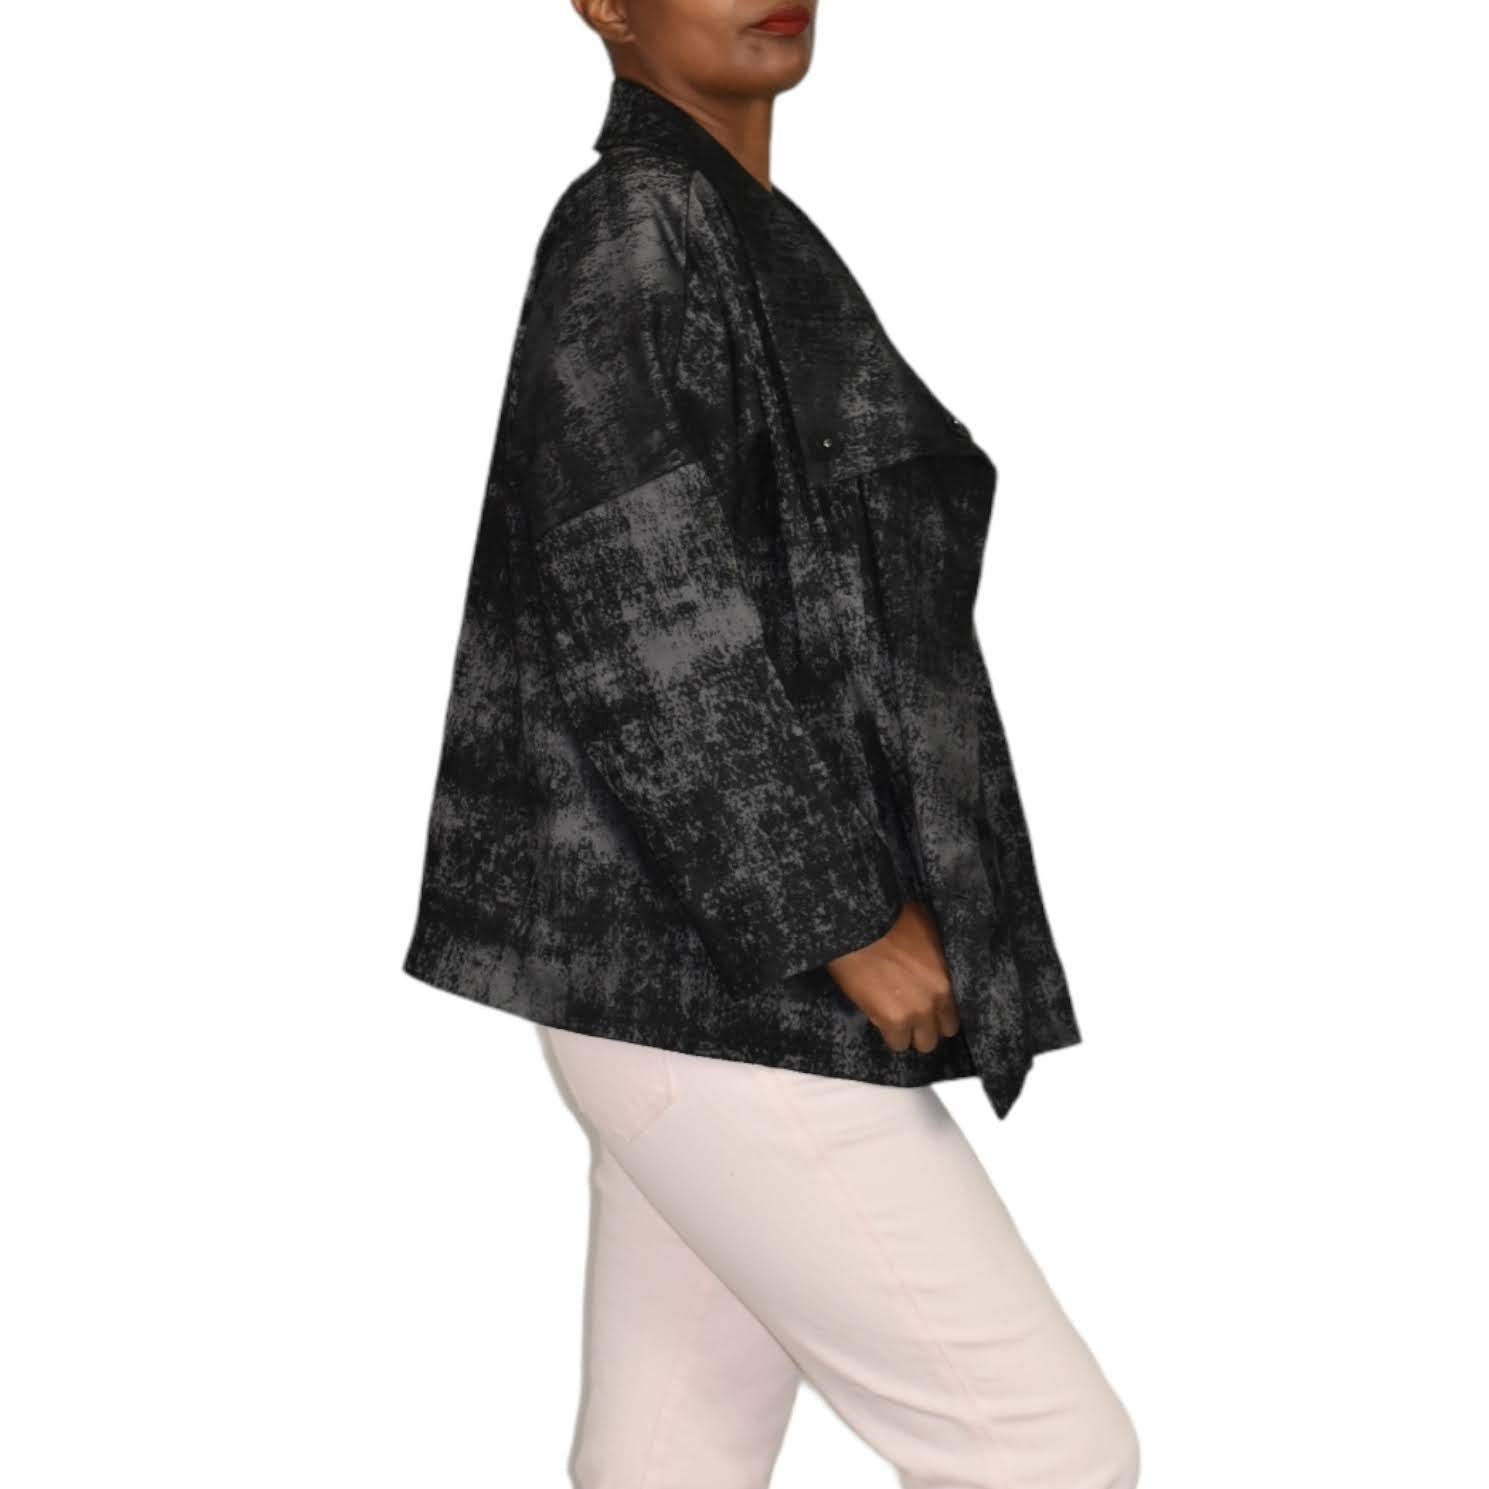 Eileen Fisher Grandeur Jacquard Jacket Size Large